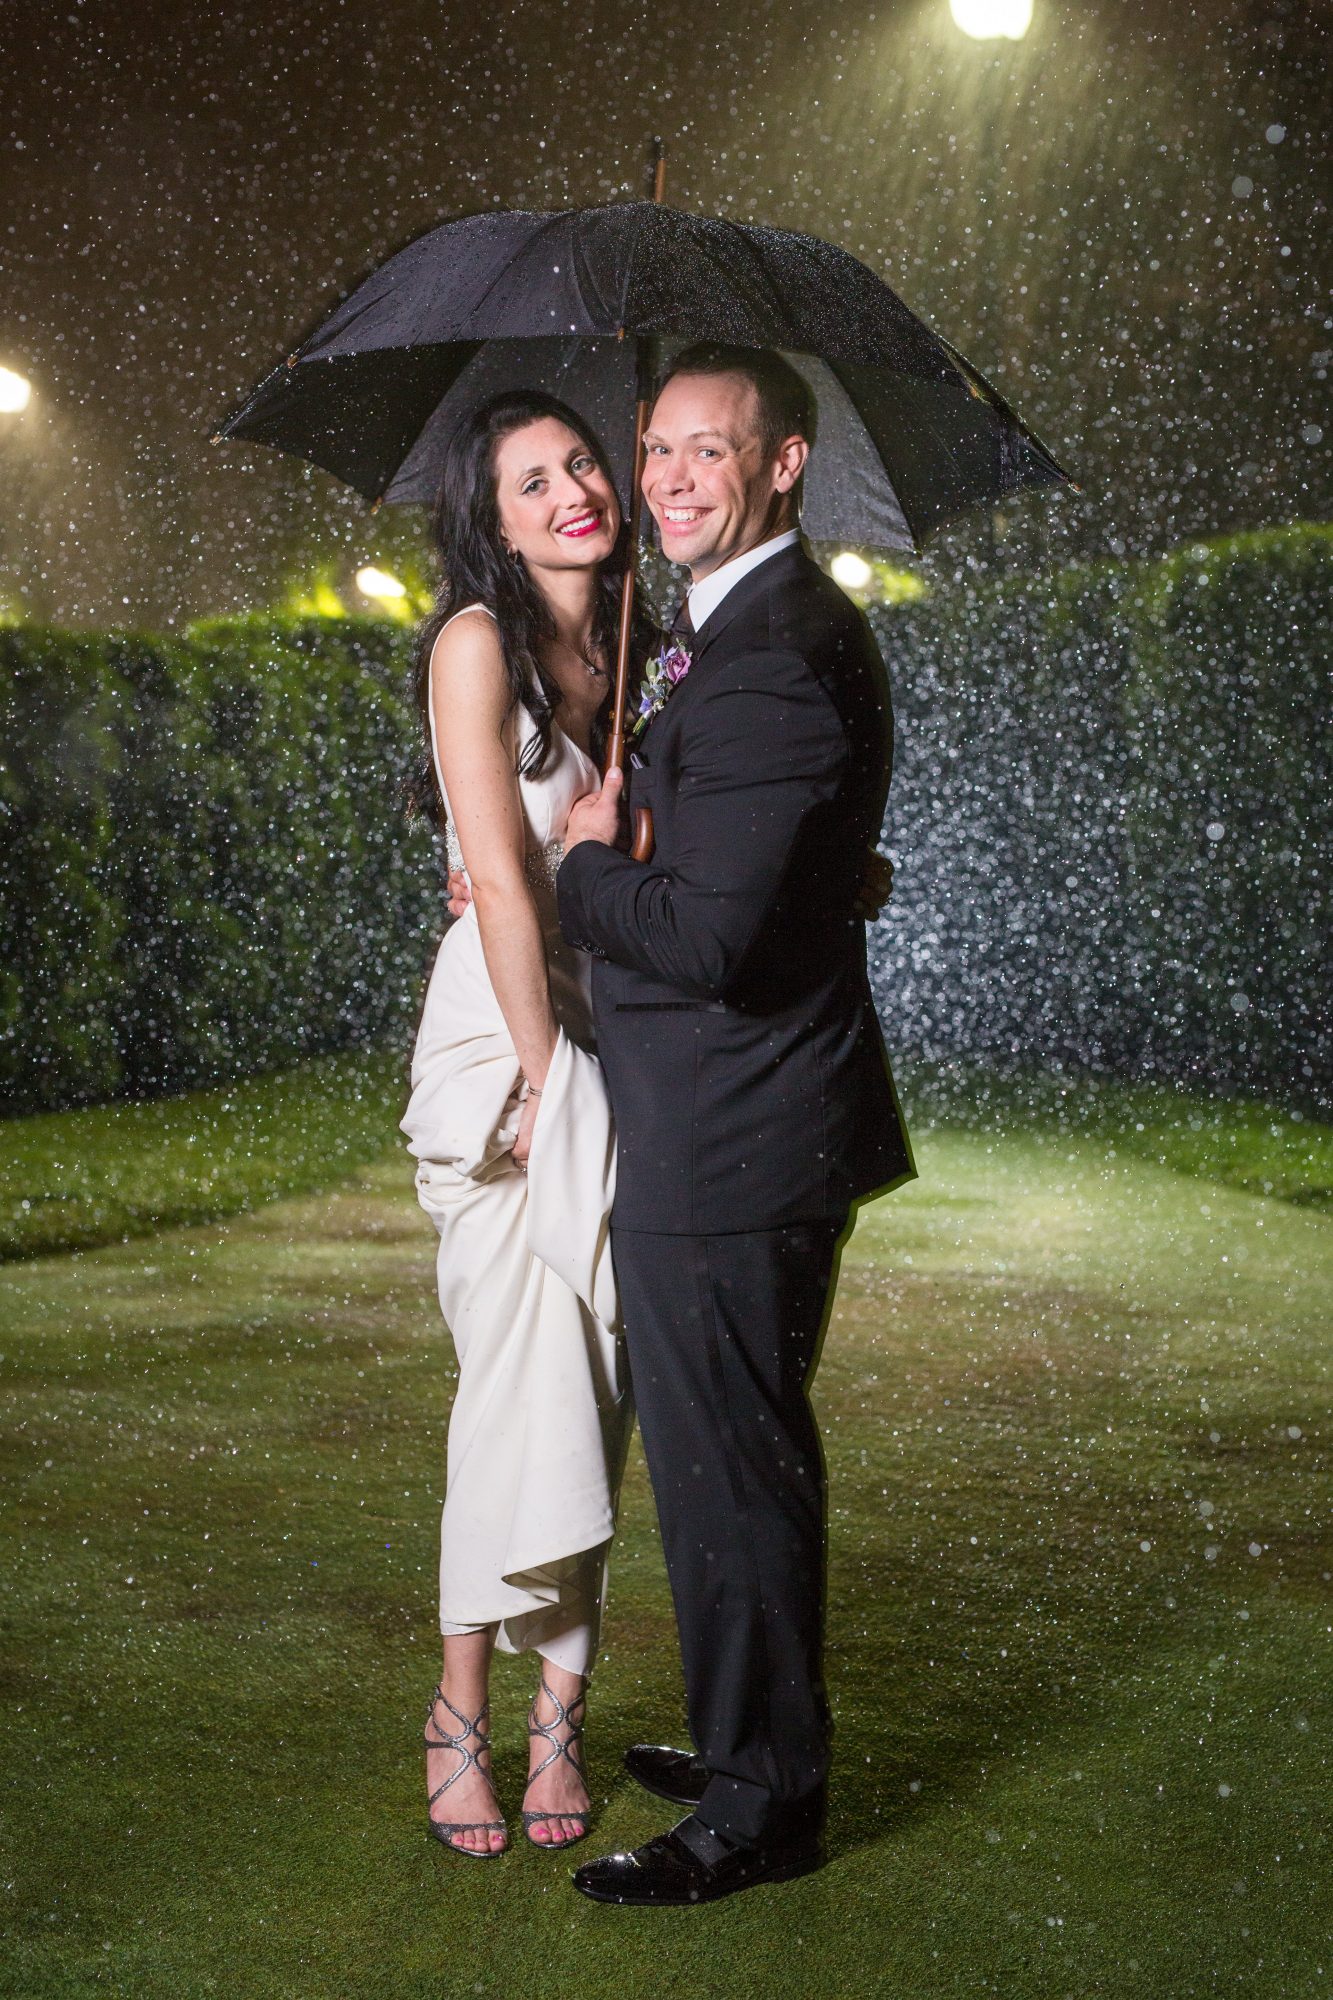 Royal Park Hotel wedding portraits in the rain at night